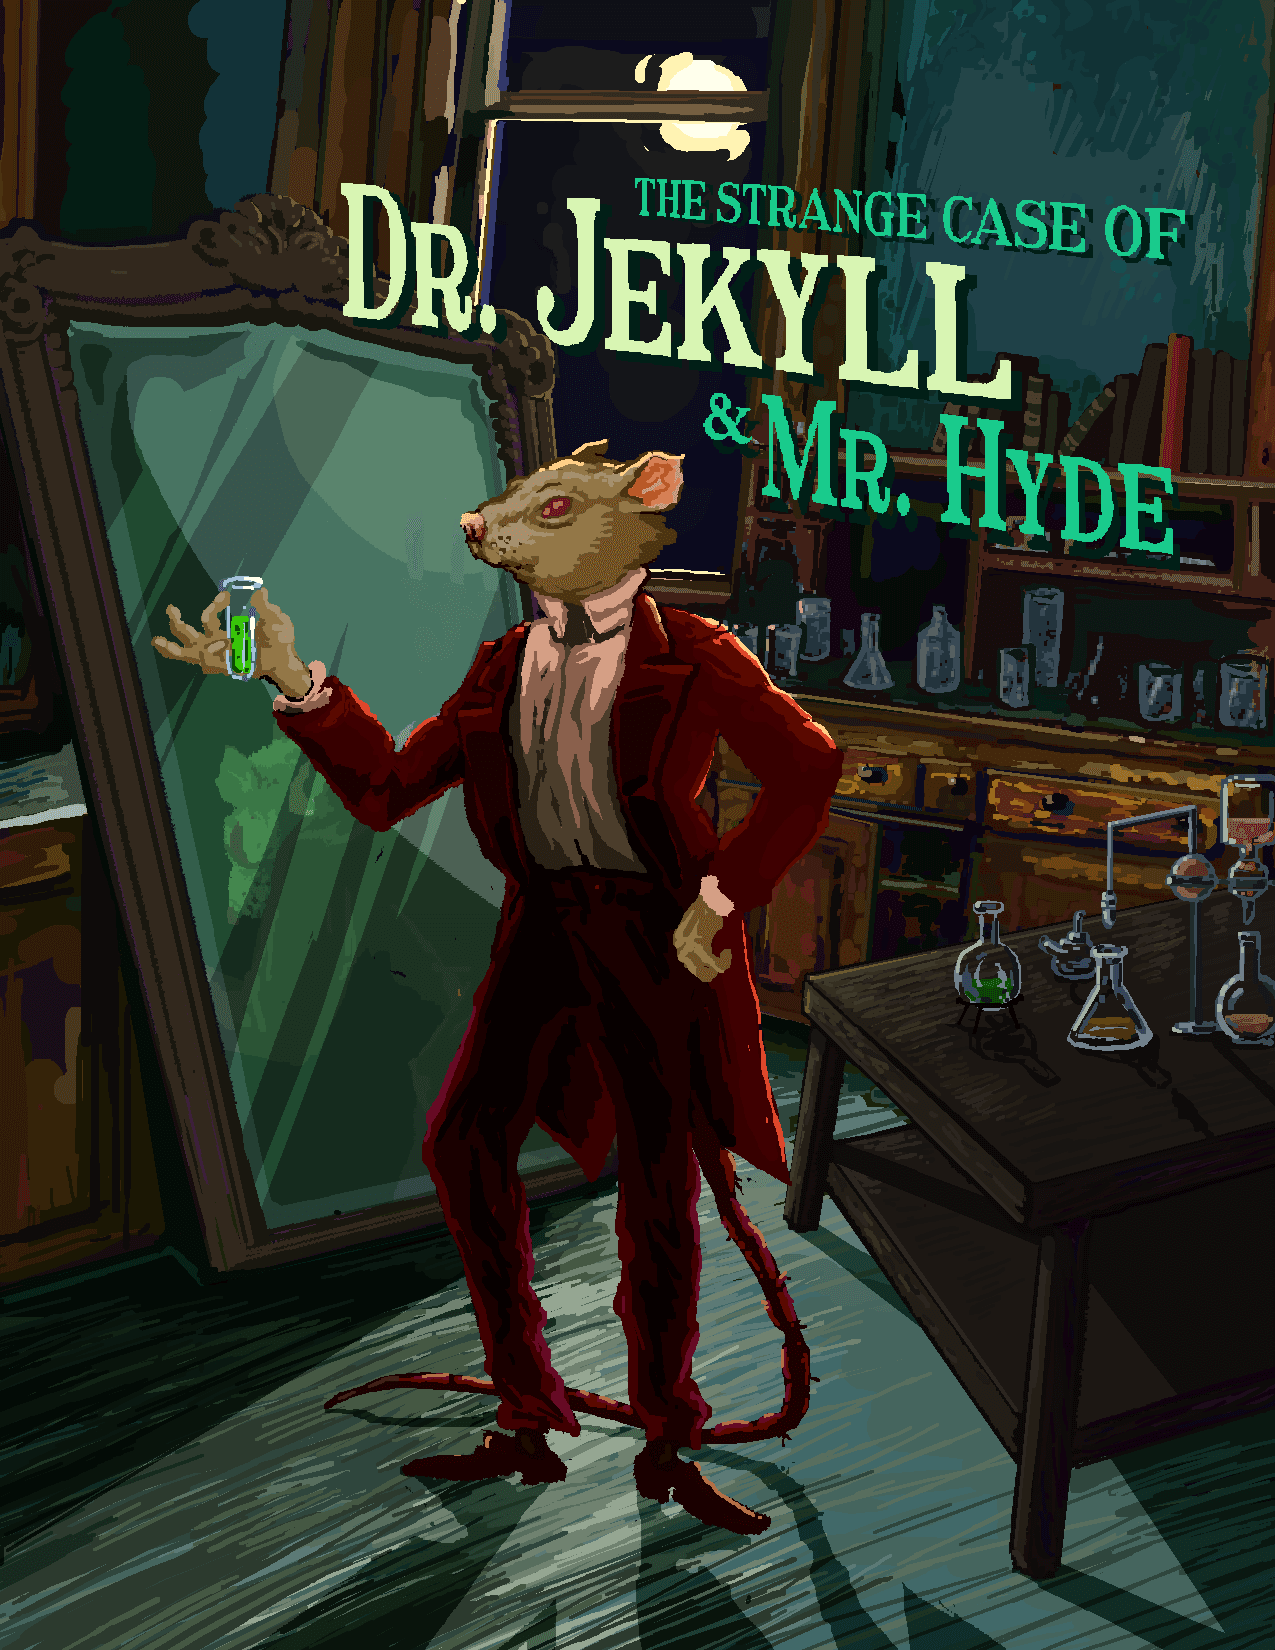 Dr. Jekyll #274